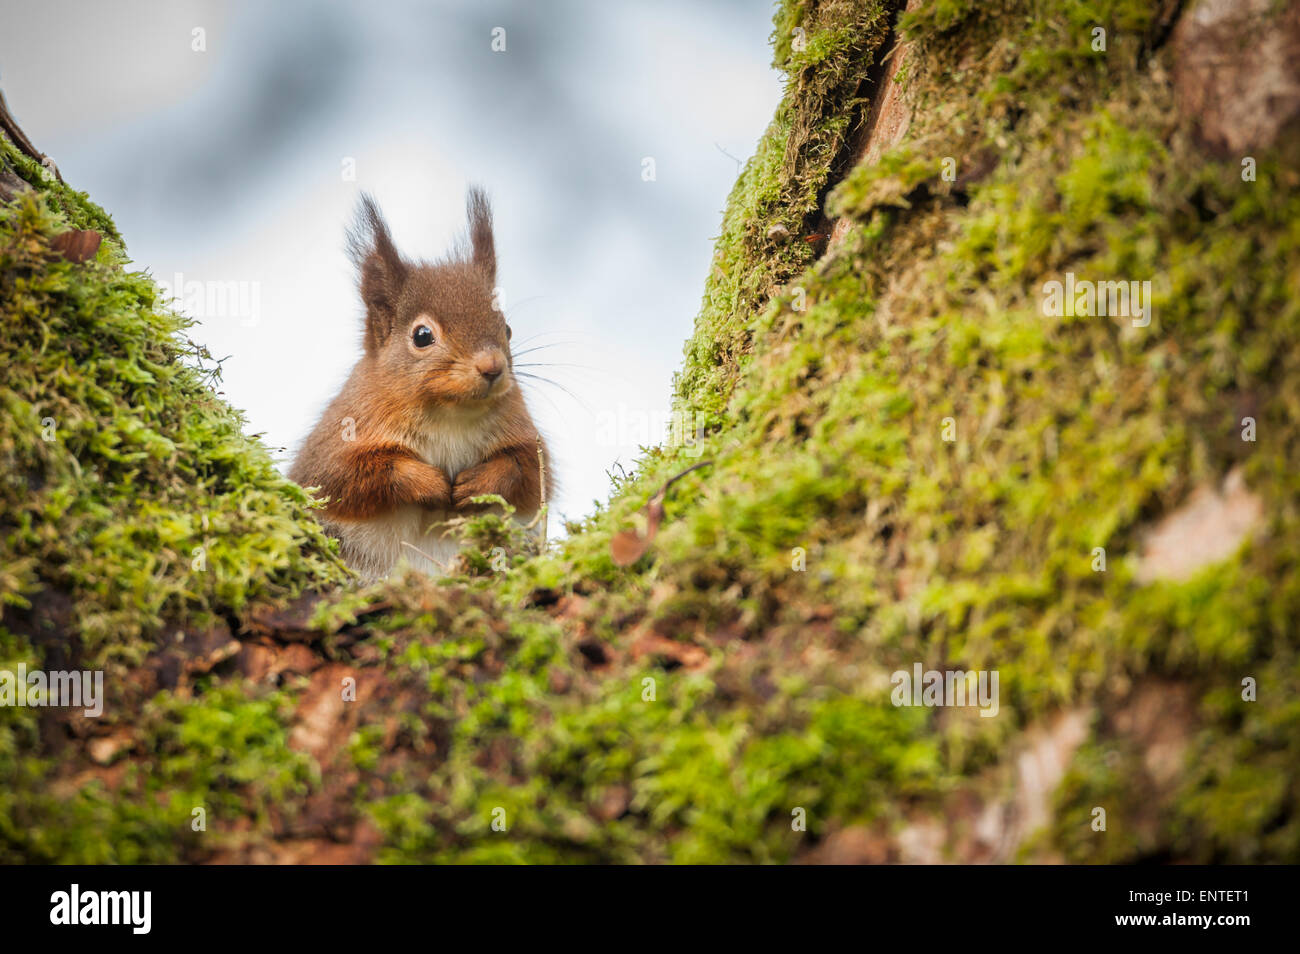 Escocia, Reino Unido, vida silvestre - ardilla roja (Sciurus vulgaris), sentado en un árbol en otoño, REINO UNIDO Foto de stock